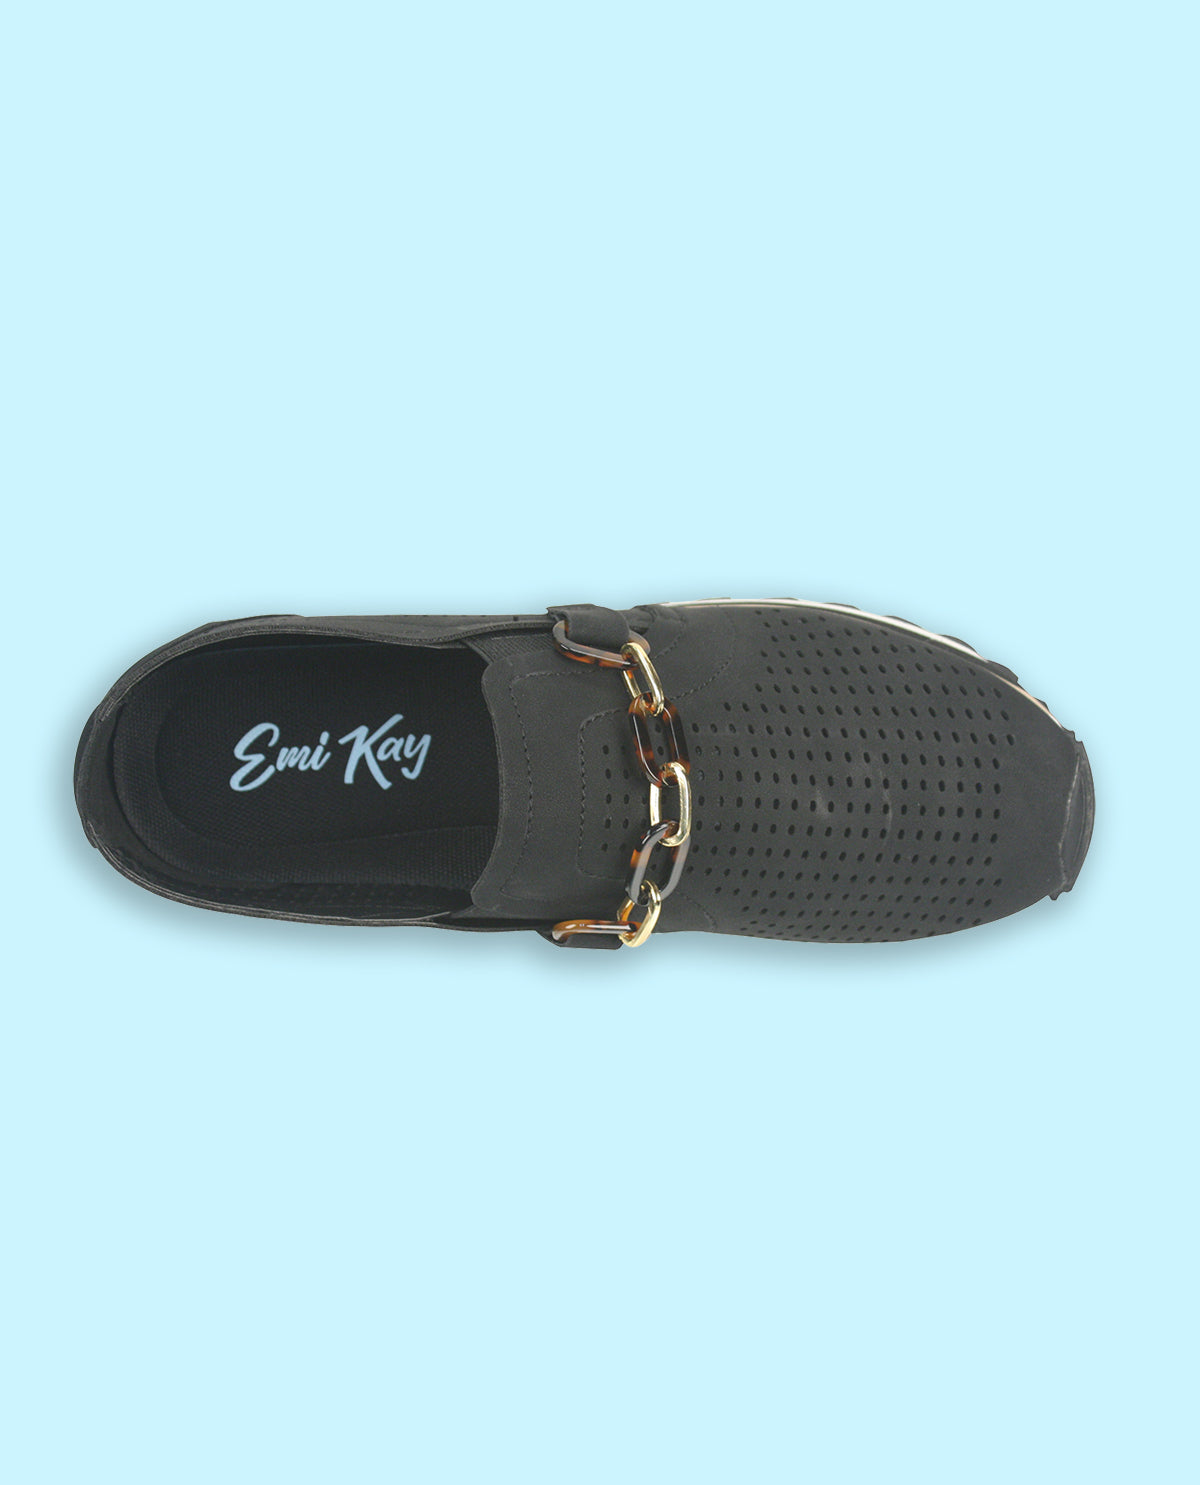 Emi Kay Upper Deck Casual Shoe